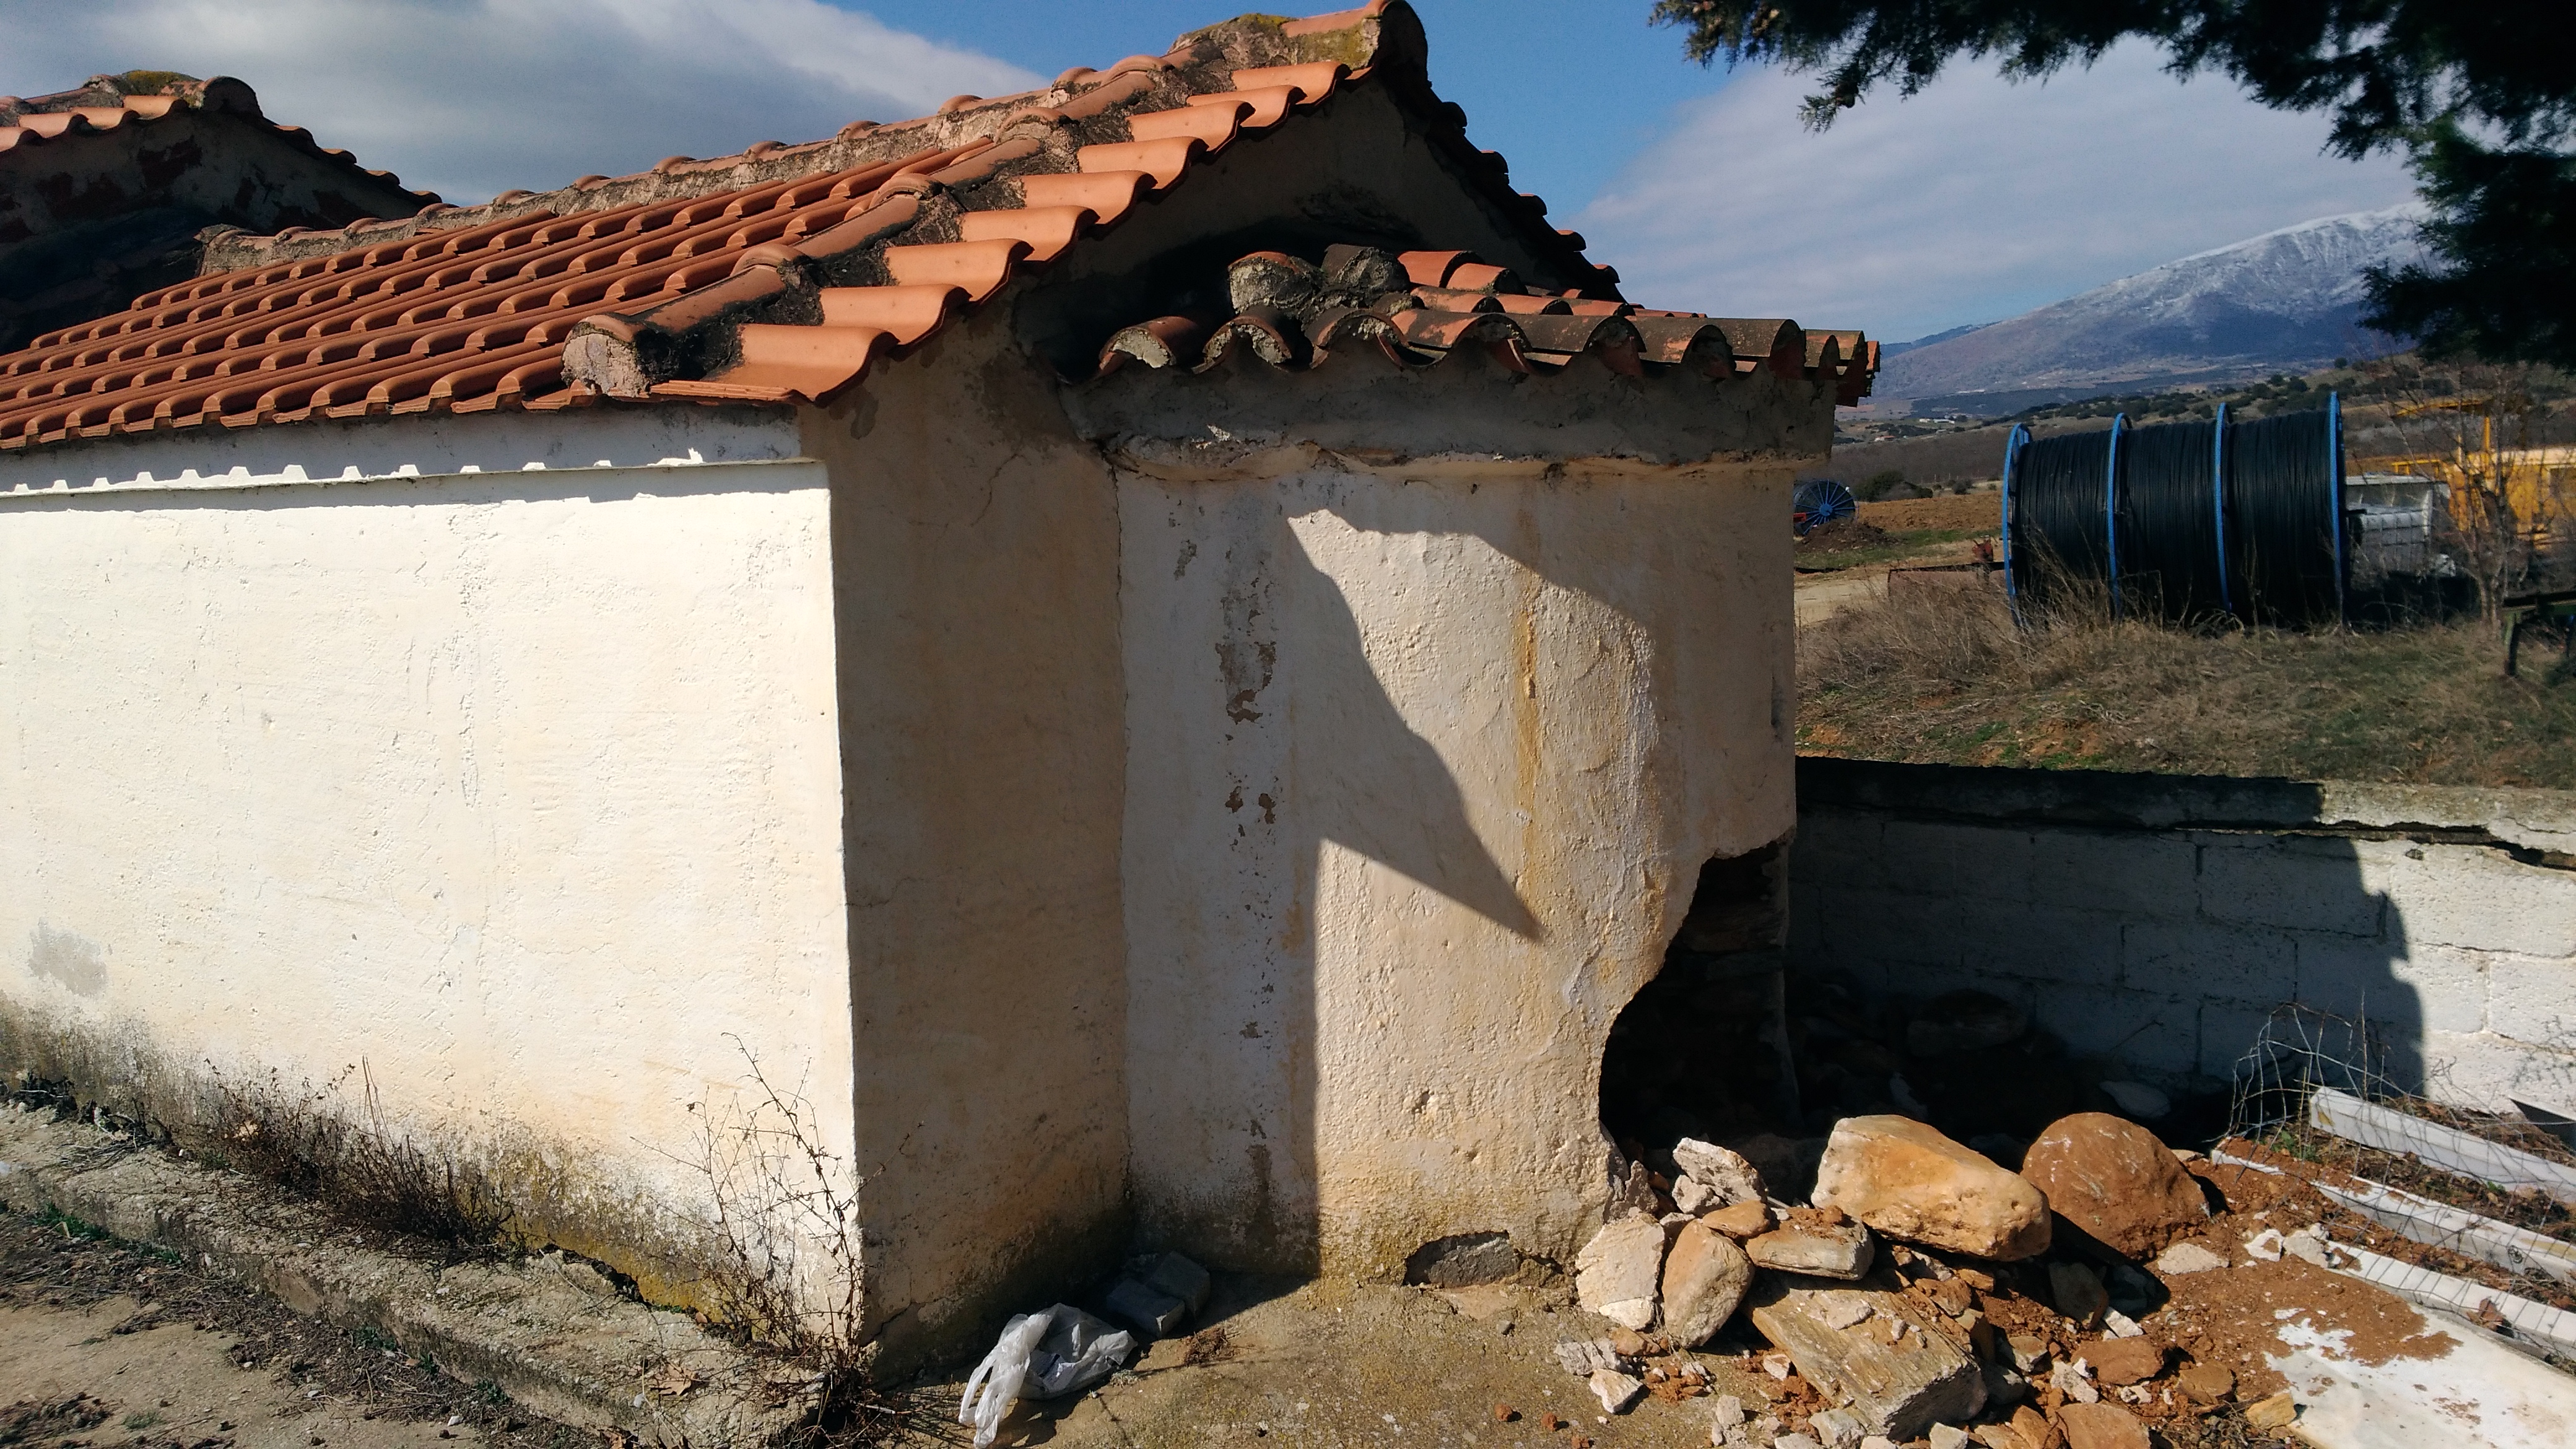 Iερόσυλοι γκρέμισαν τμήμα εκκλησίας στη Δολίχη Ελασσόνας 